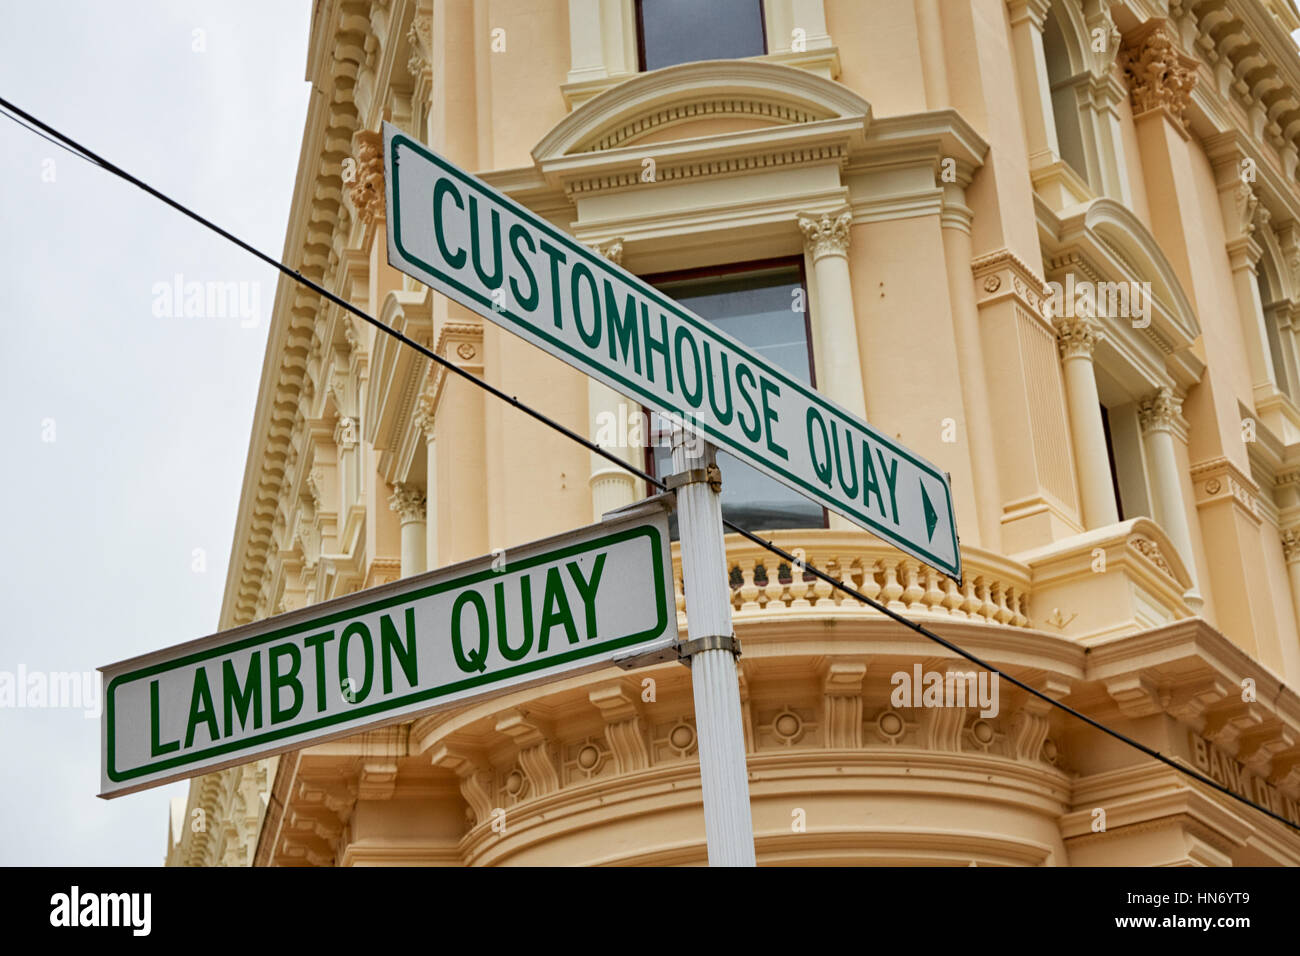 Old Bank of New Zealand, Lambton Quay, Wellington, New Zealand Stock Photo